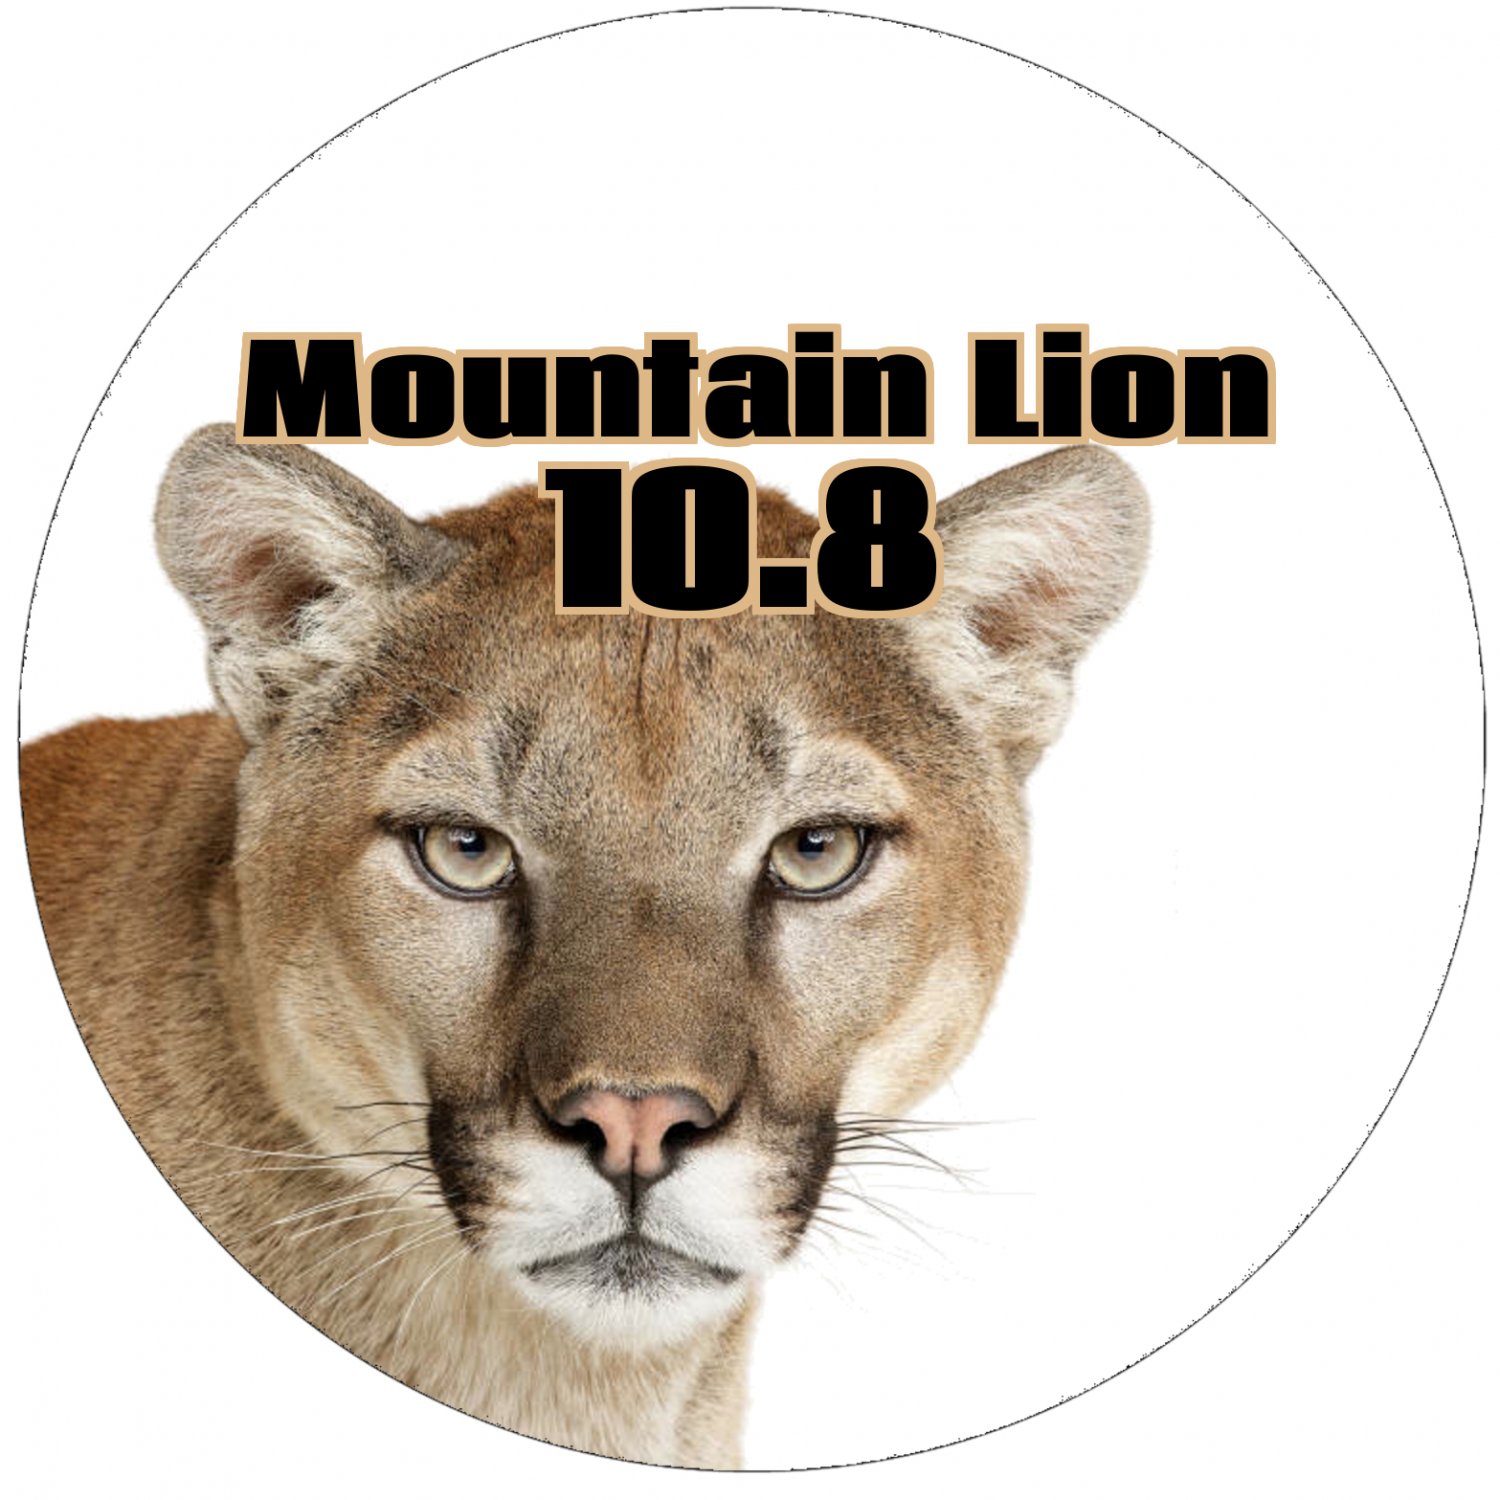 mac os x mountain lion dmg download